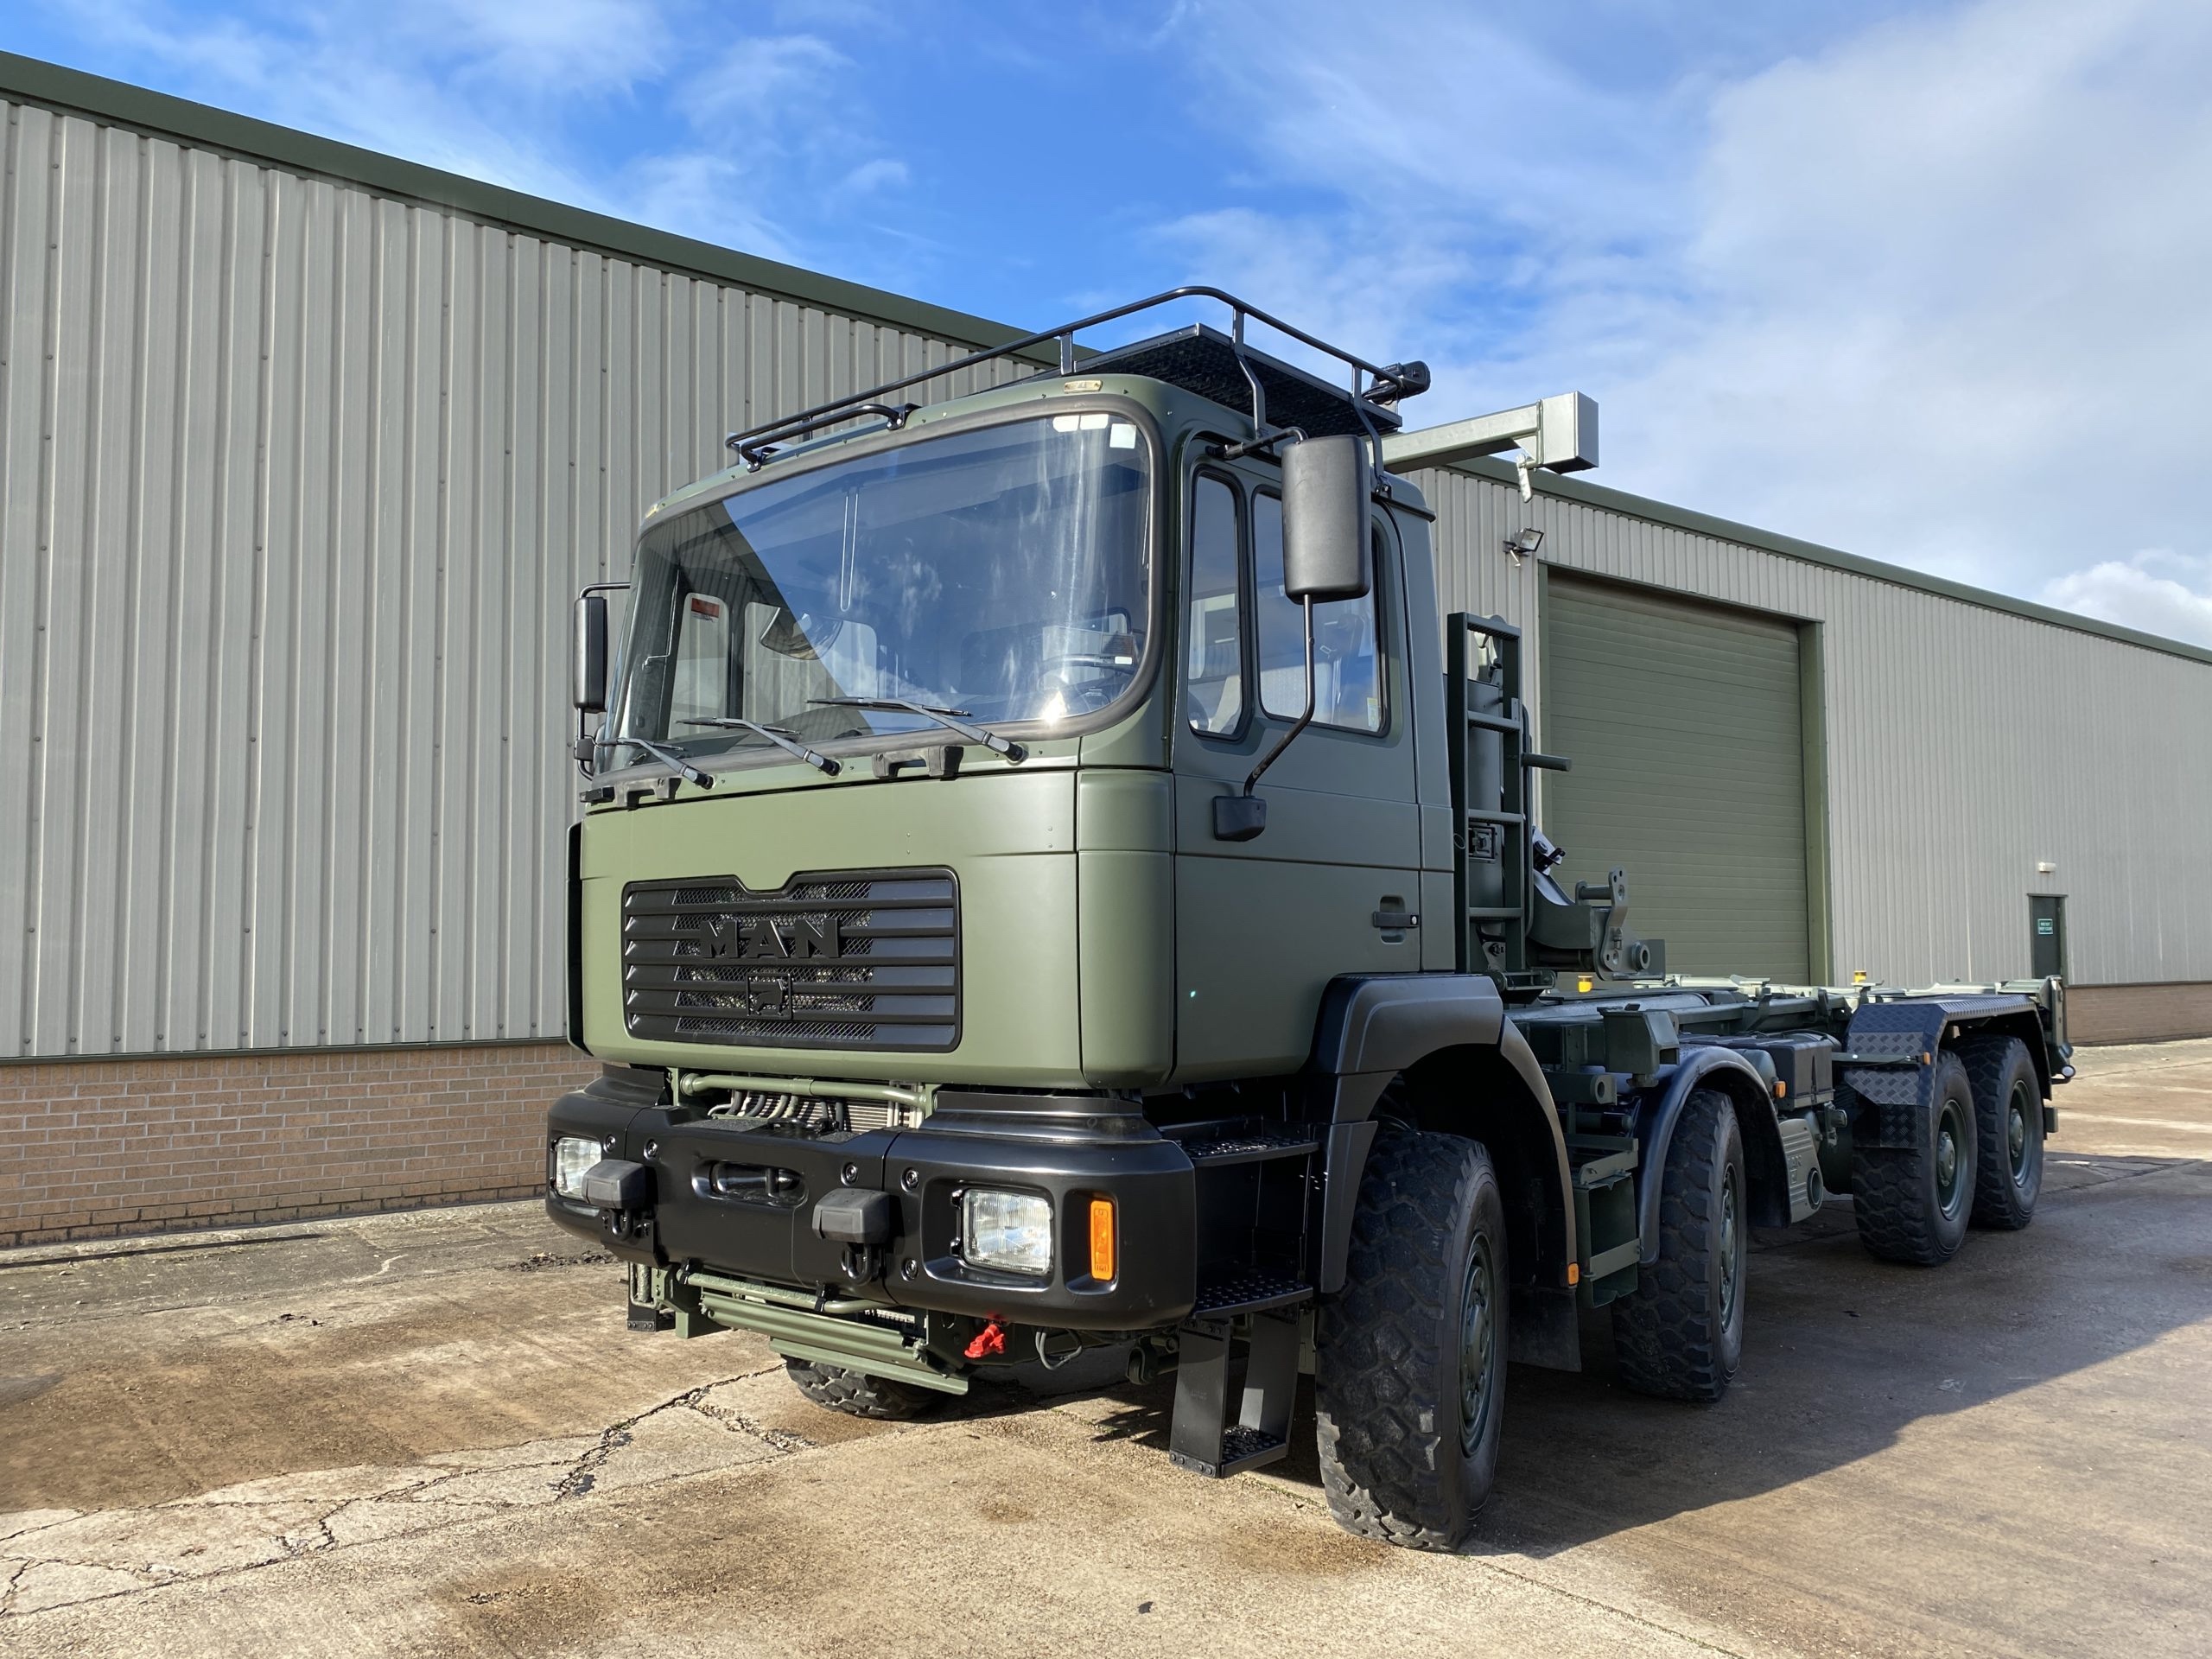 MAN 35.464 8x8 Drops Truck  - ex military vehicles for sale, mod surplus